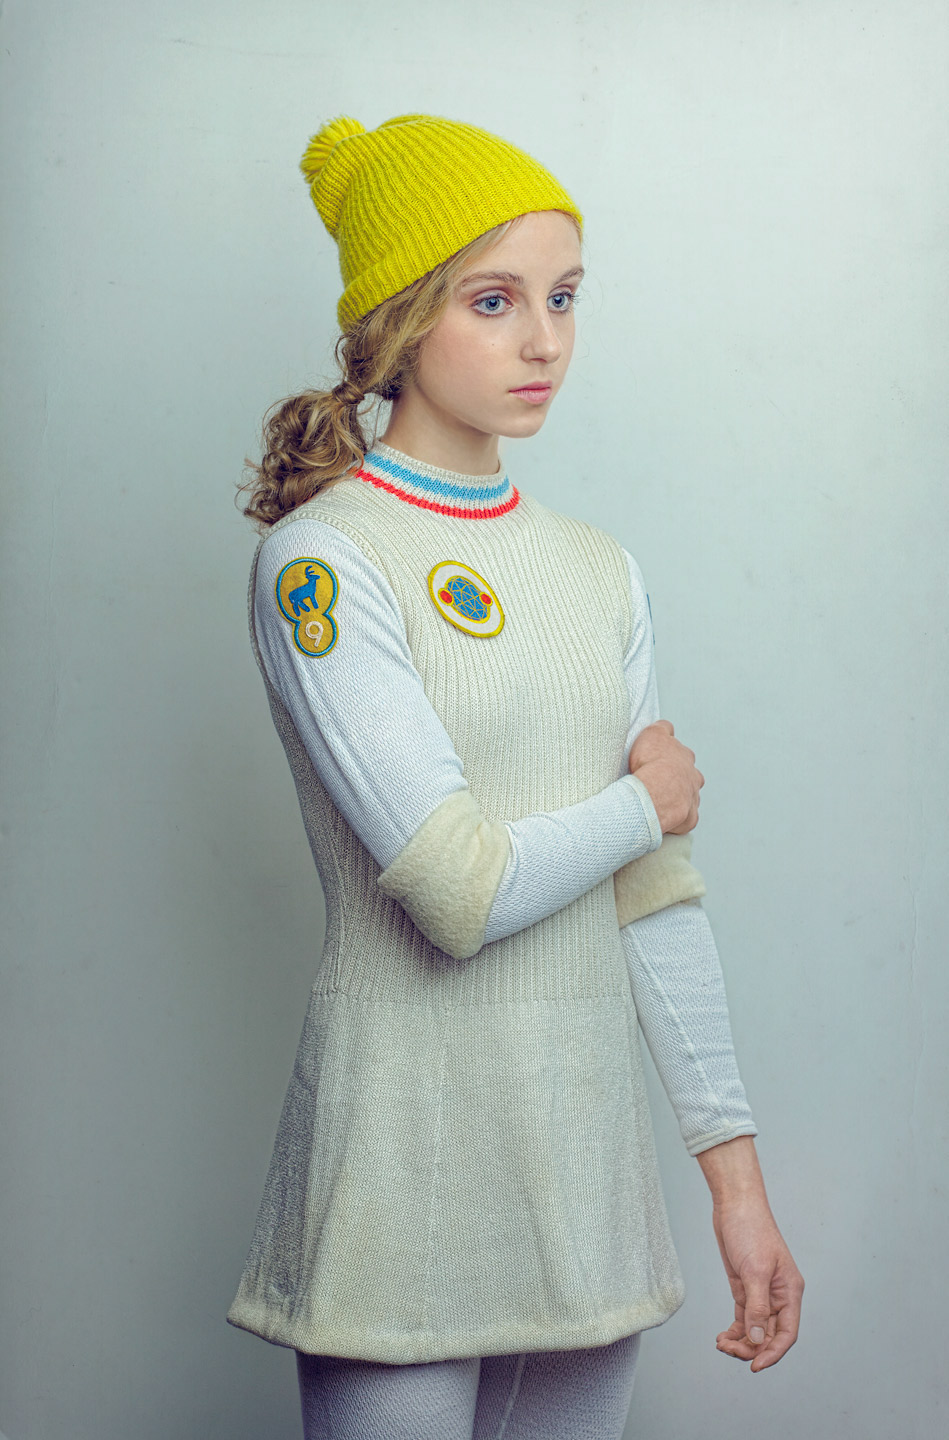 Girl in winter uniform 1 - Project Astoria: Test 01 - Art by Todd Baxter